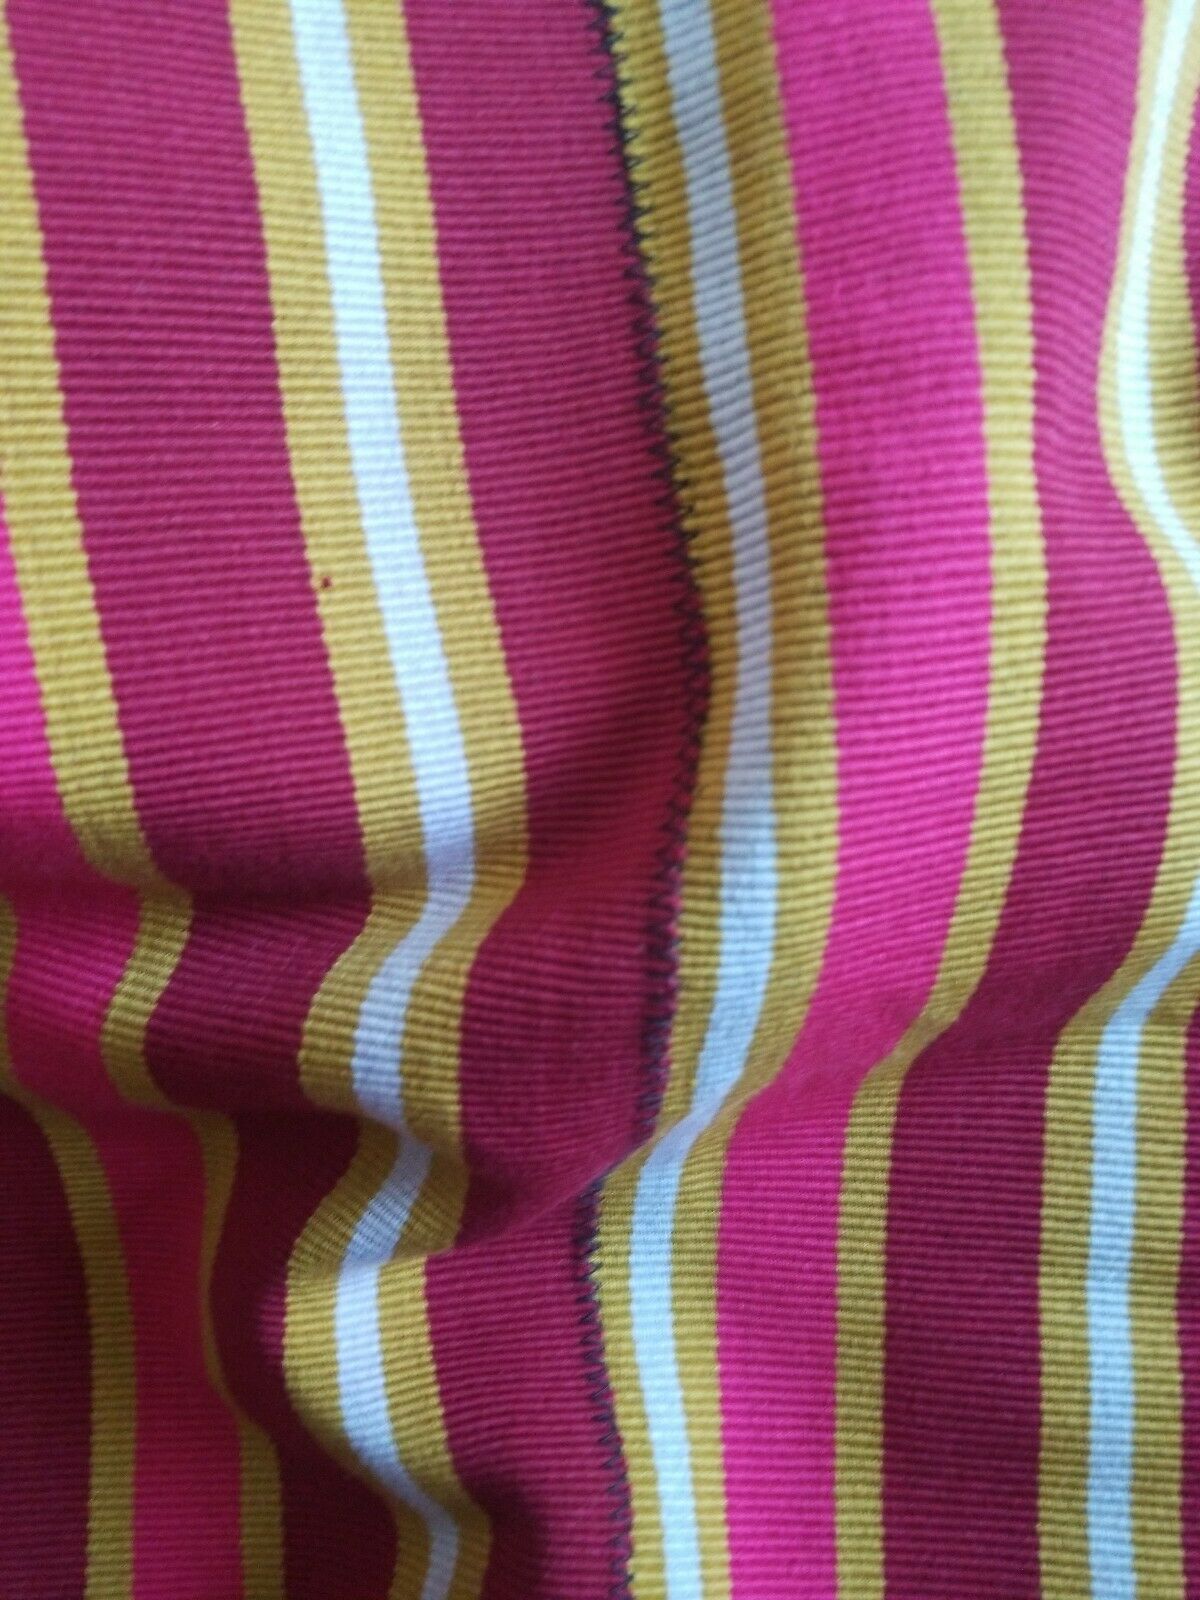 FasoDaFani Fabric From Boukina burgundy,mustard  multi colored stripes52"×77"